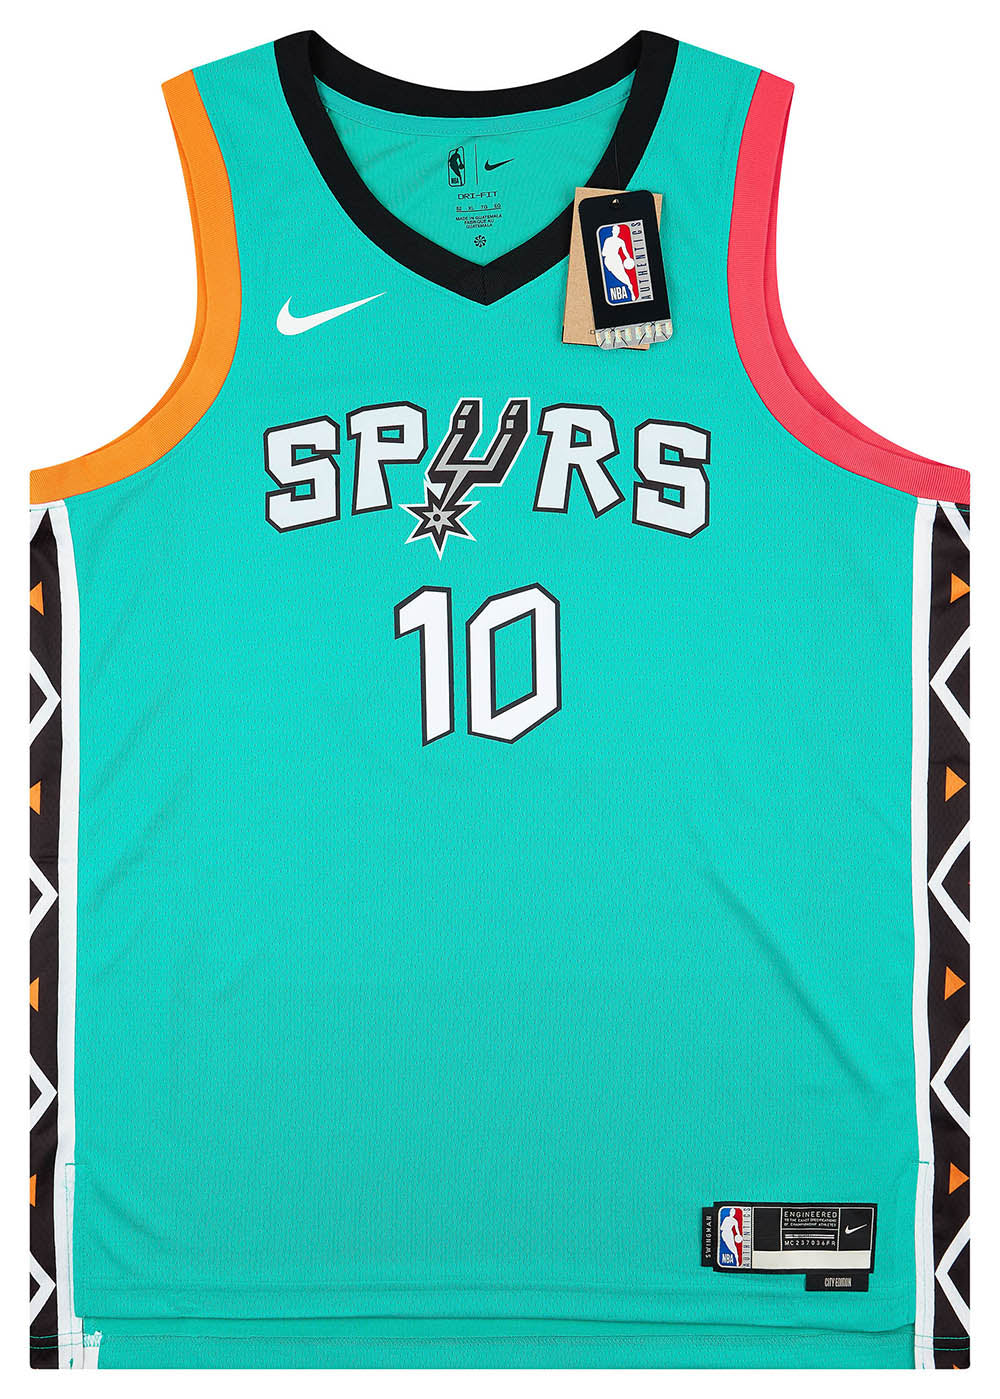 2022-23 San Antonio Spurs Sochan #10 Nike Swingman Alternate Jersey (XL)